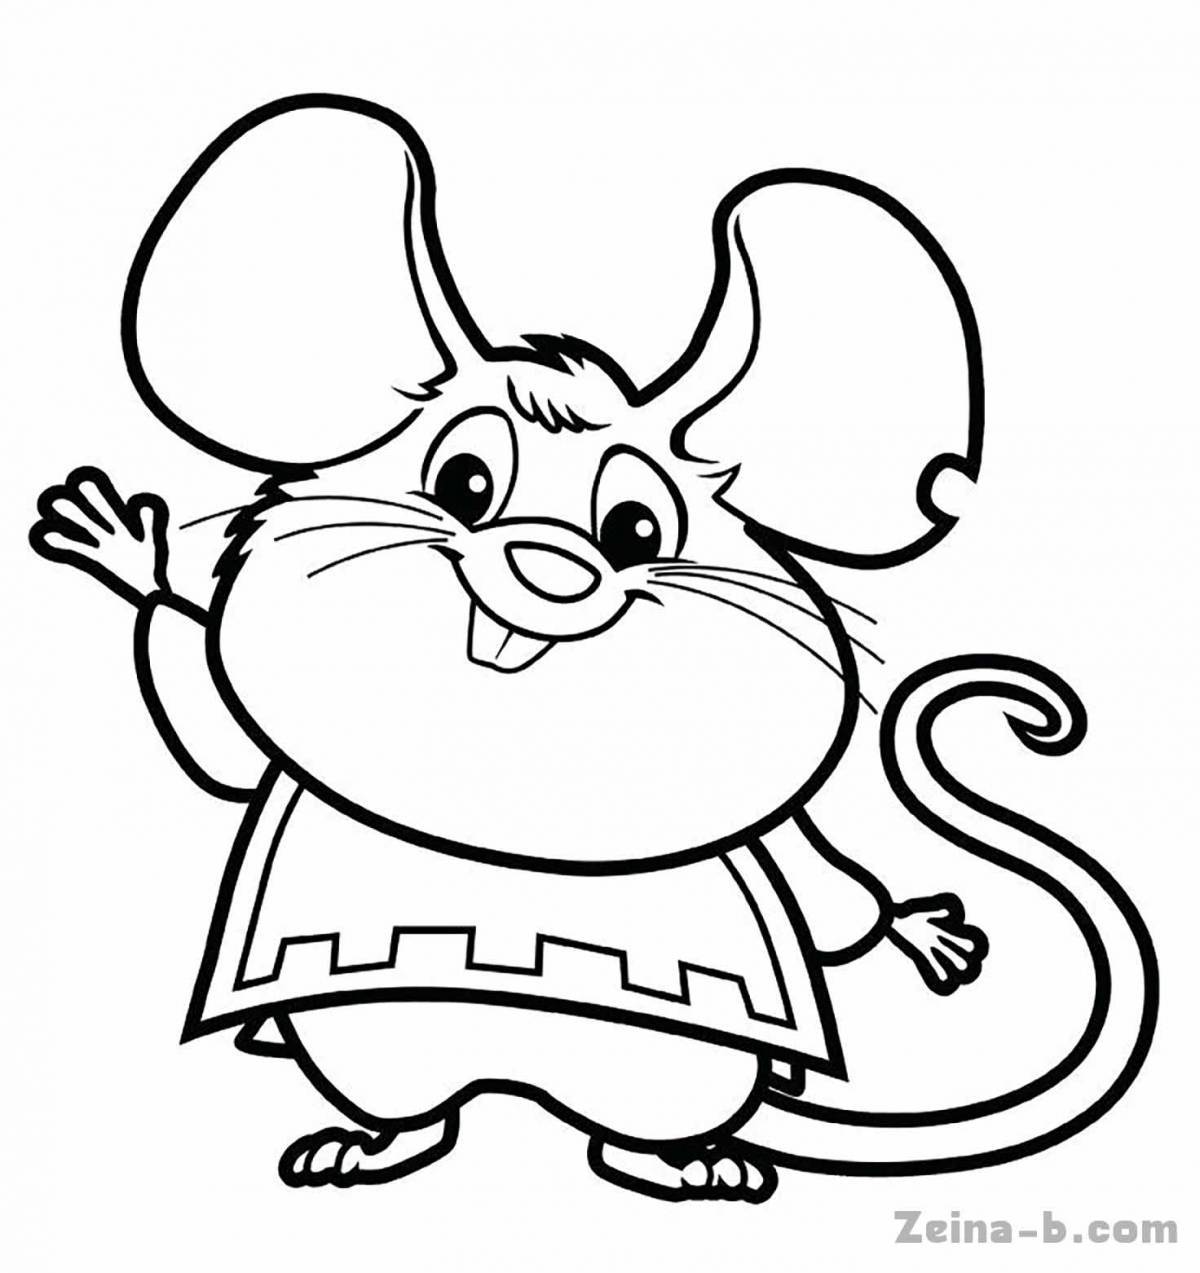 Zani mouse coloring page